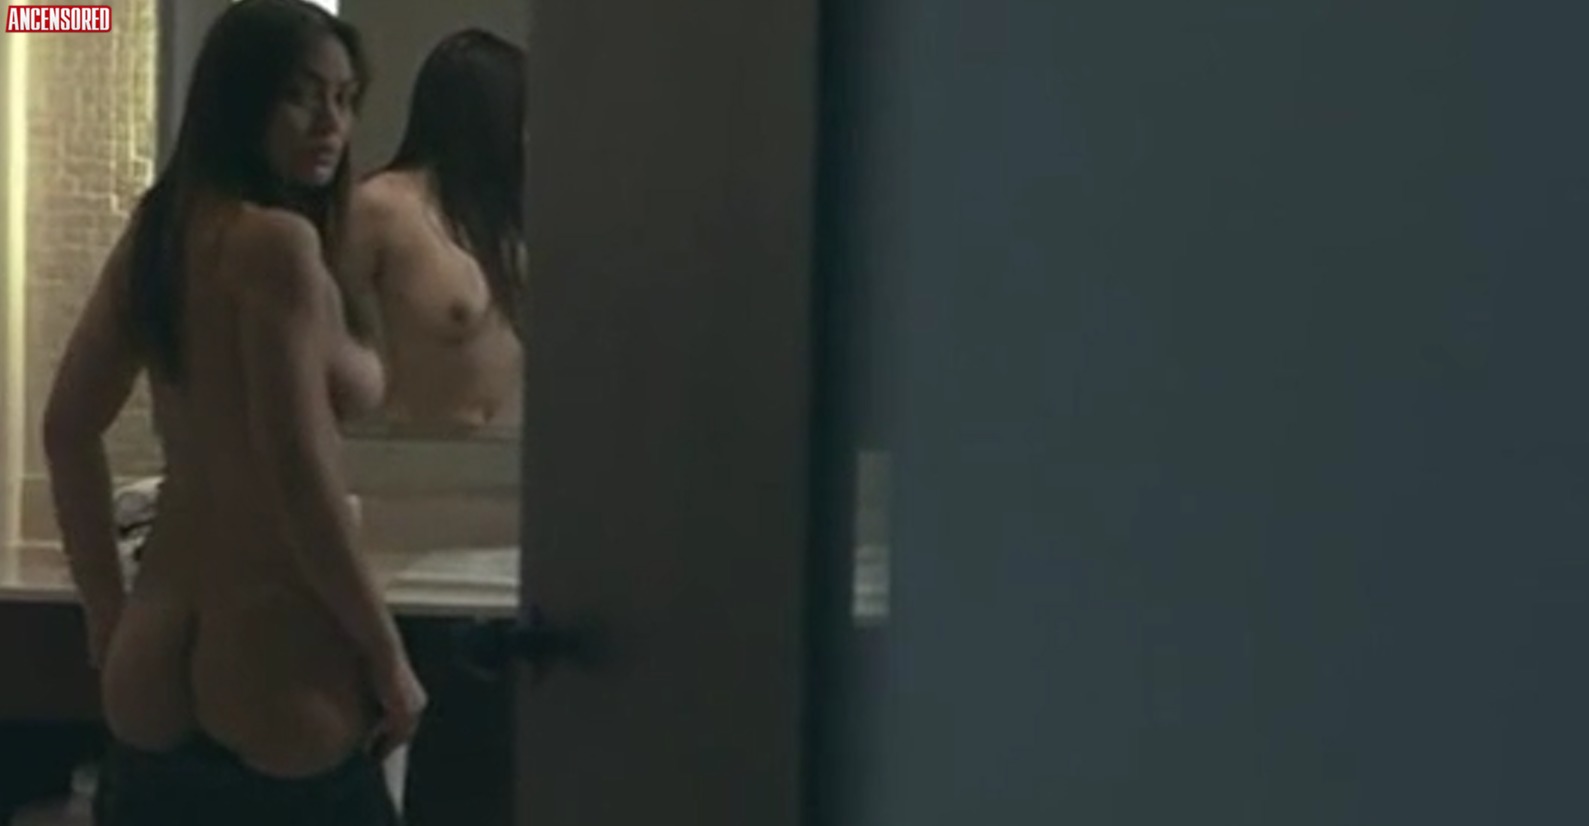 Savika chaiyadej and bongkoj khongmalai jan dara pathommabot (2012) nude?  hot! watch online watch online